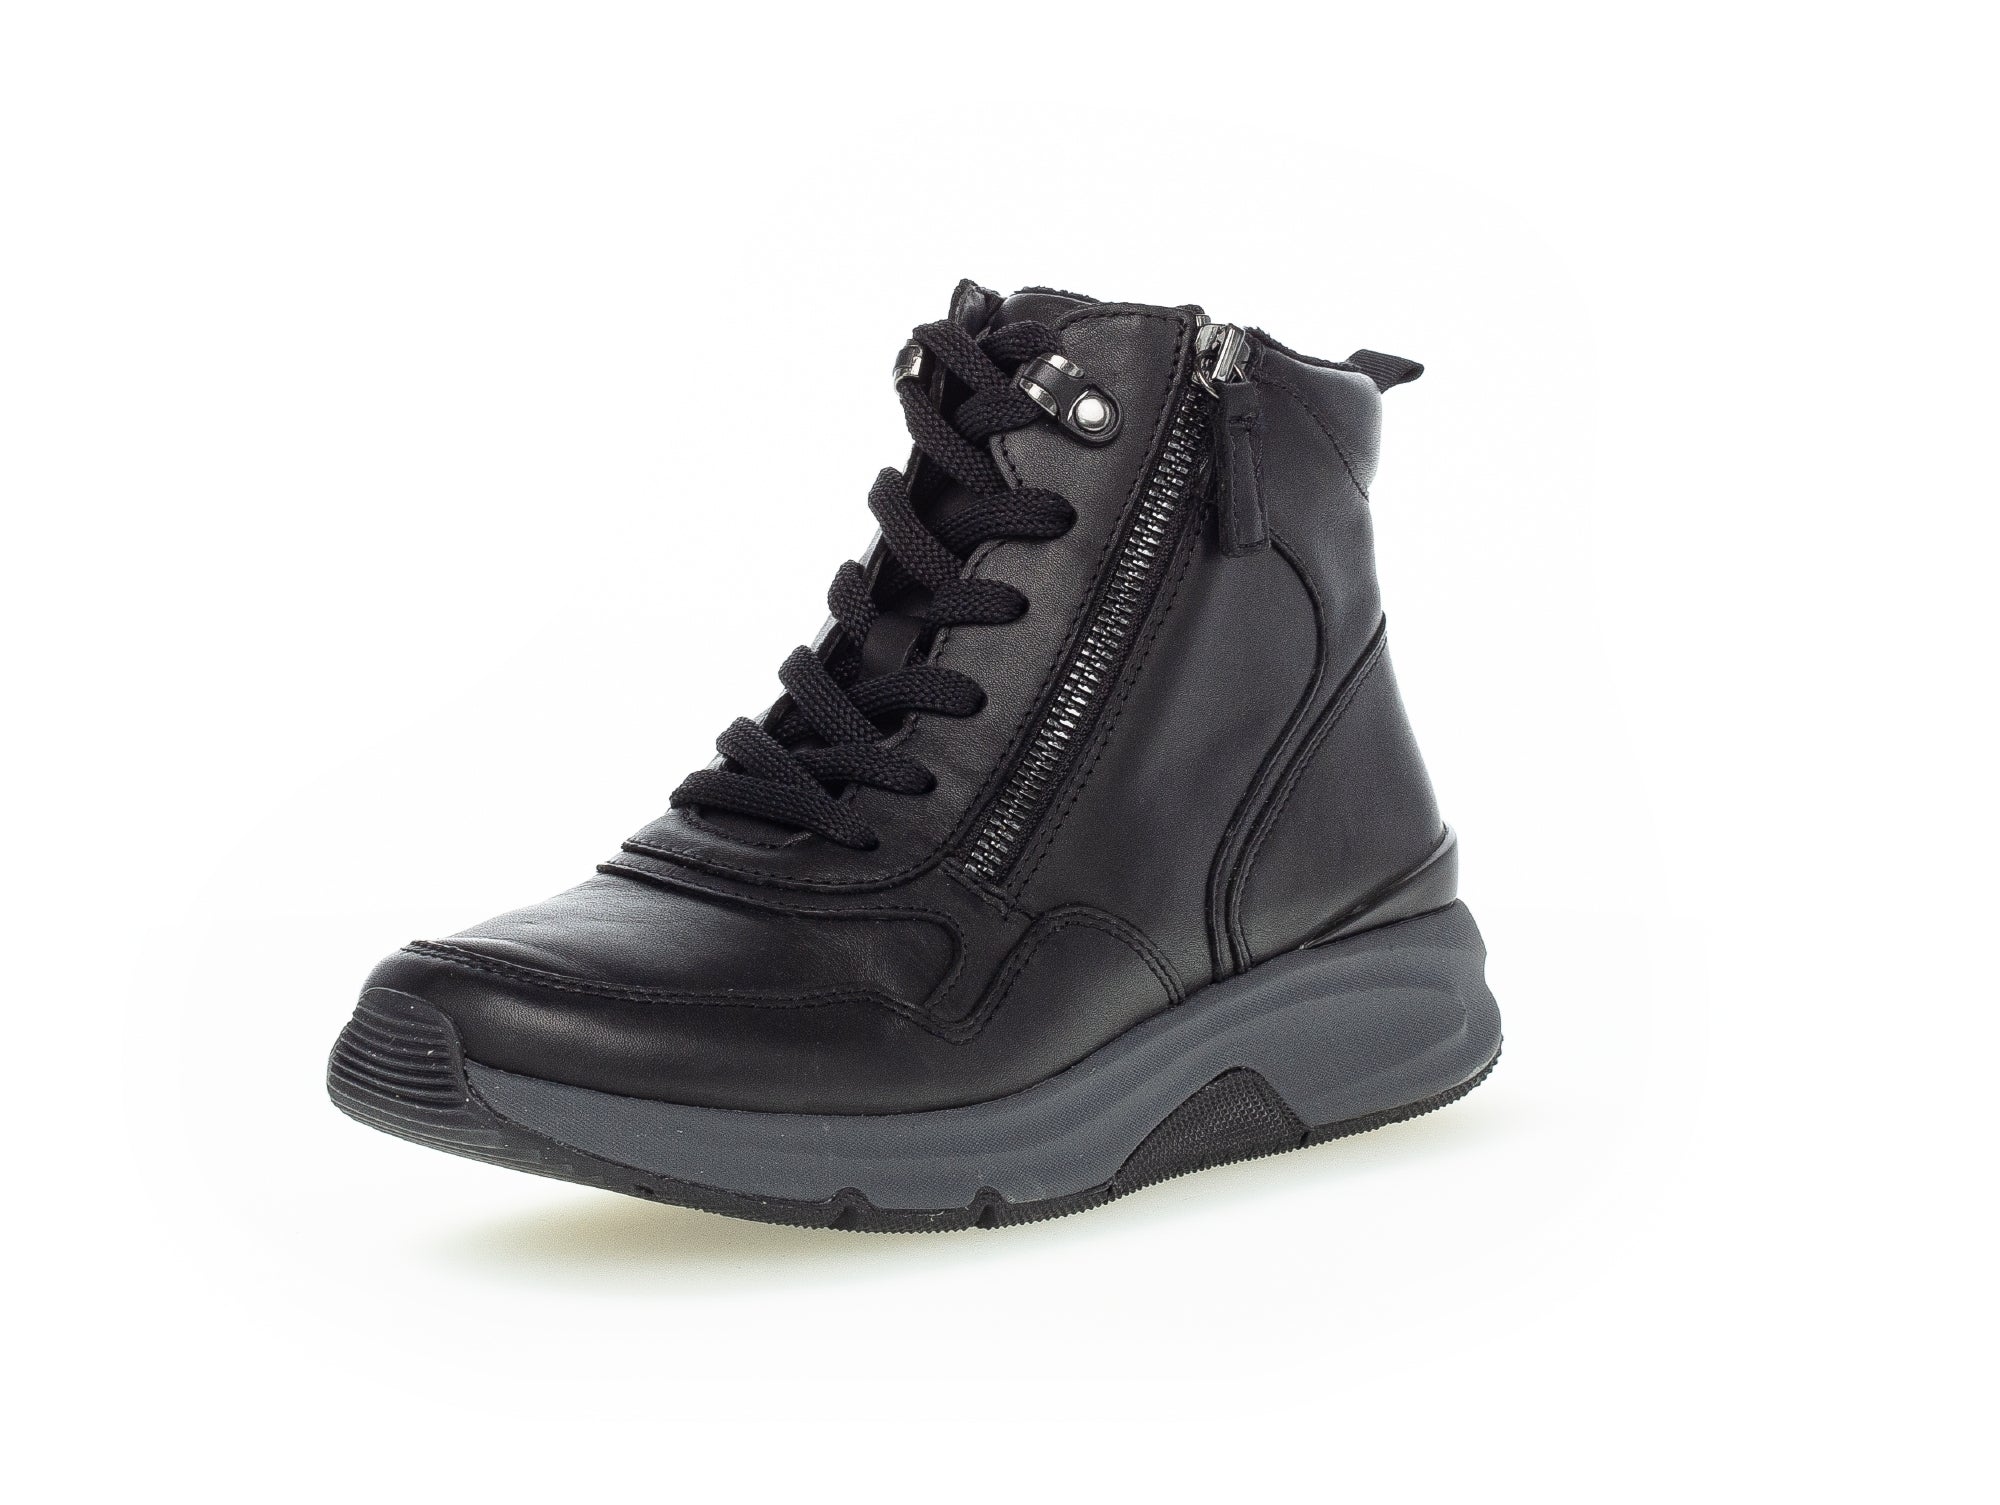 '96.888.57' women's walking boot = Black - Chaplinshoes'96.888.57' women's walking boot = BlackGabor